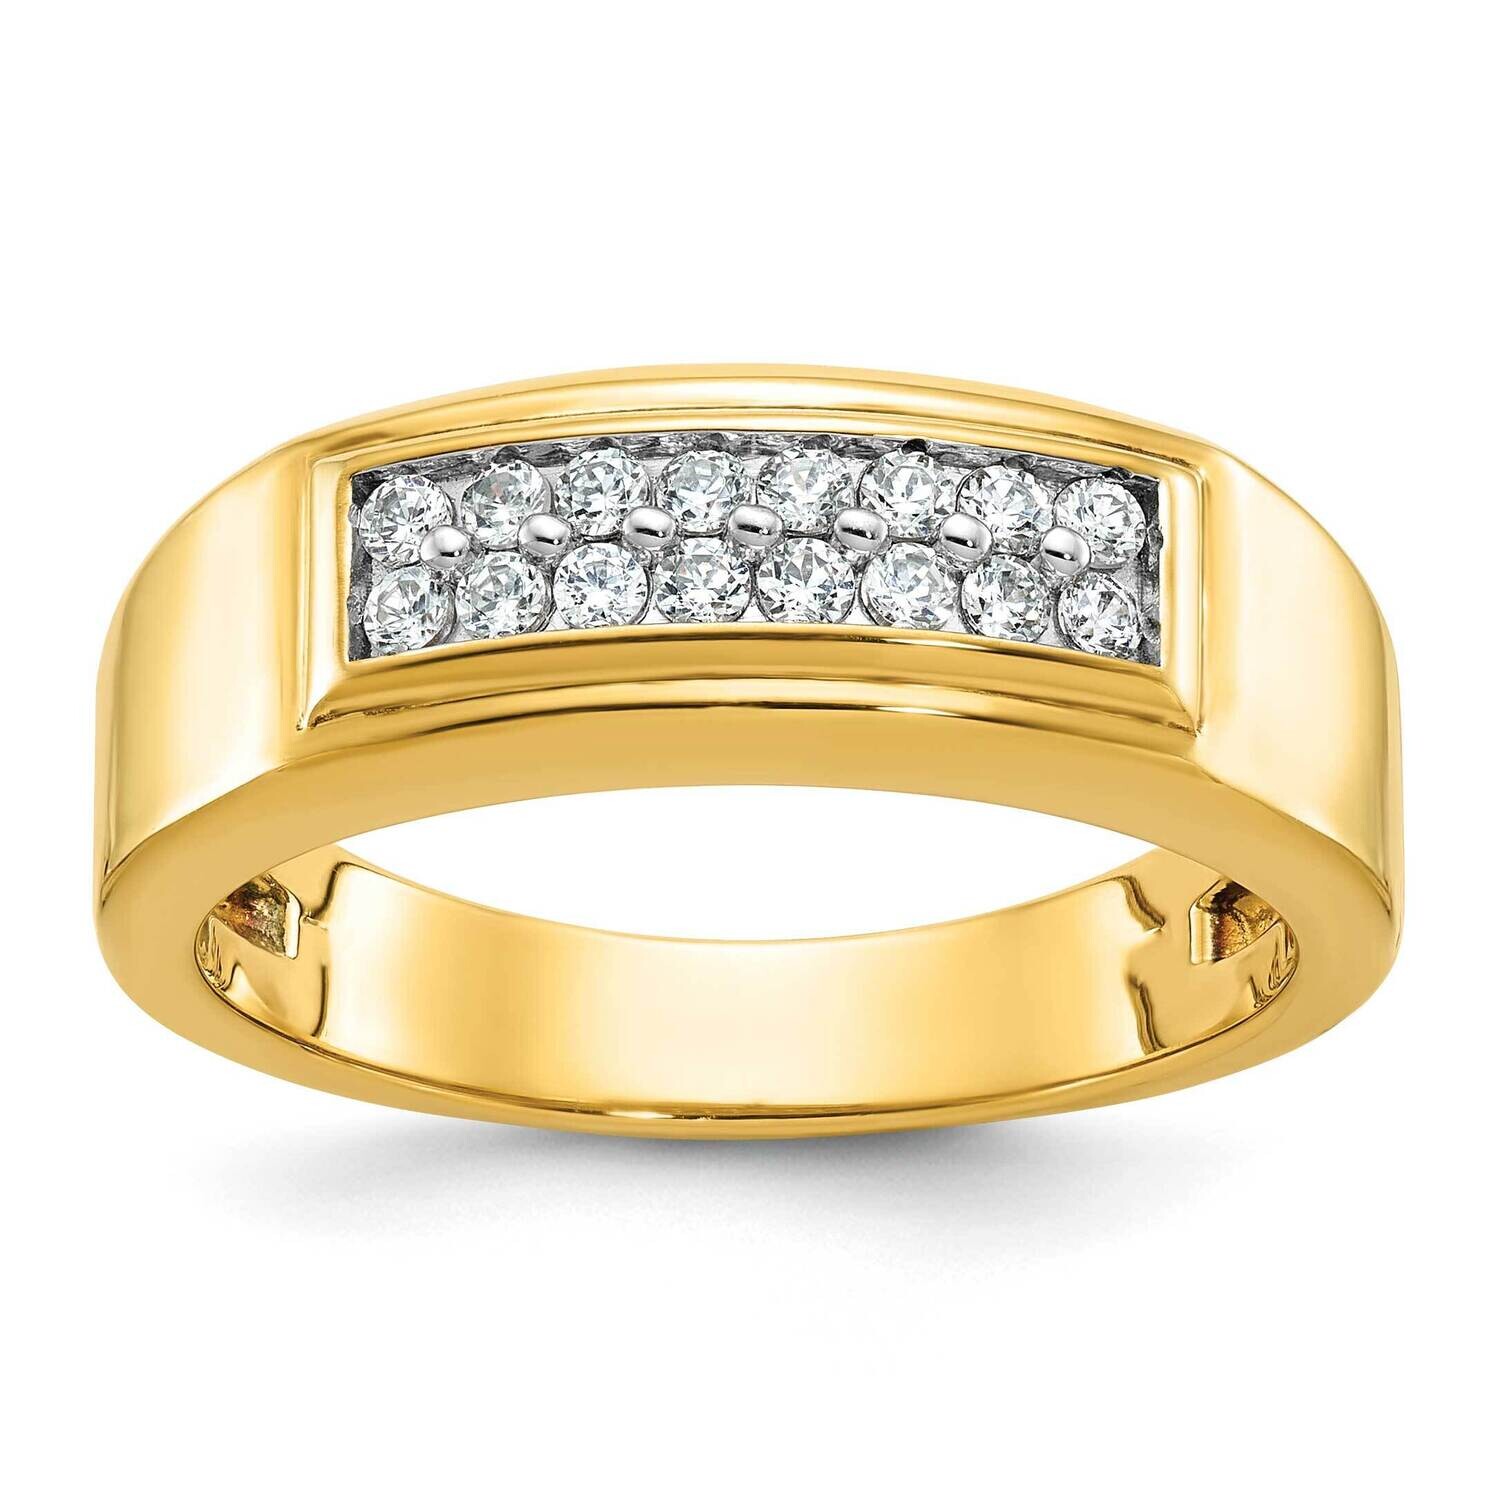 Ibgoodman Men's Polished 2-Row 1/3 Carat Aa Quality Diamond Ring 14k Gold B64208-4YAA